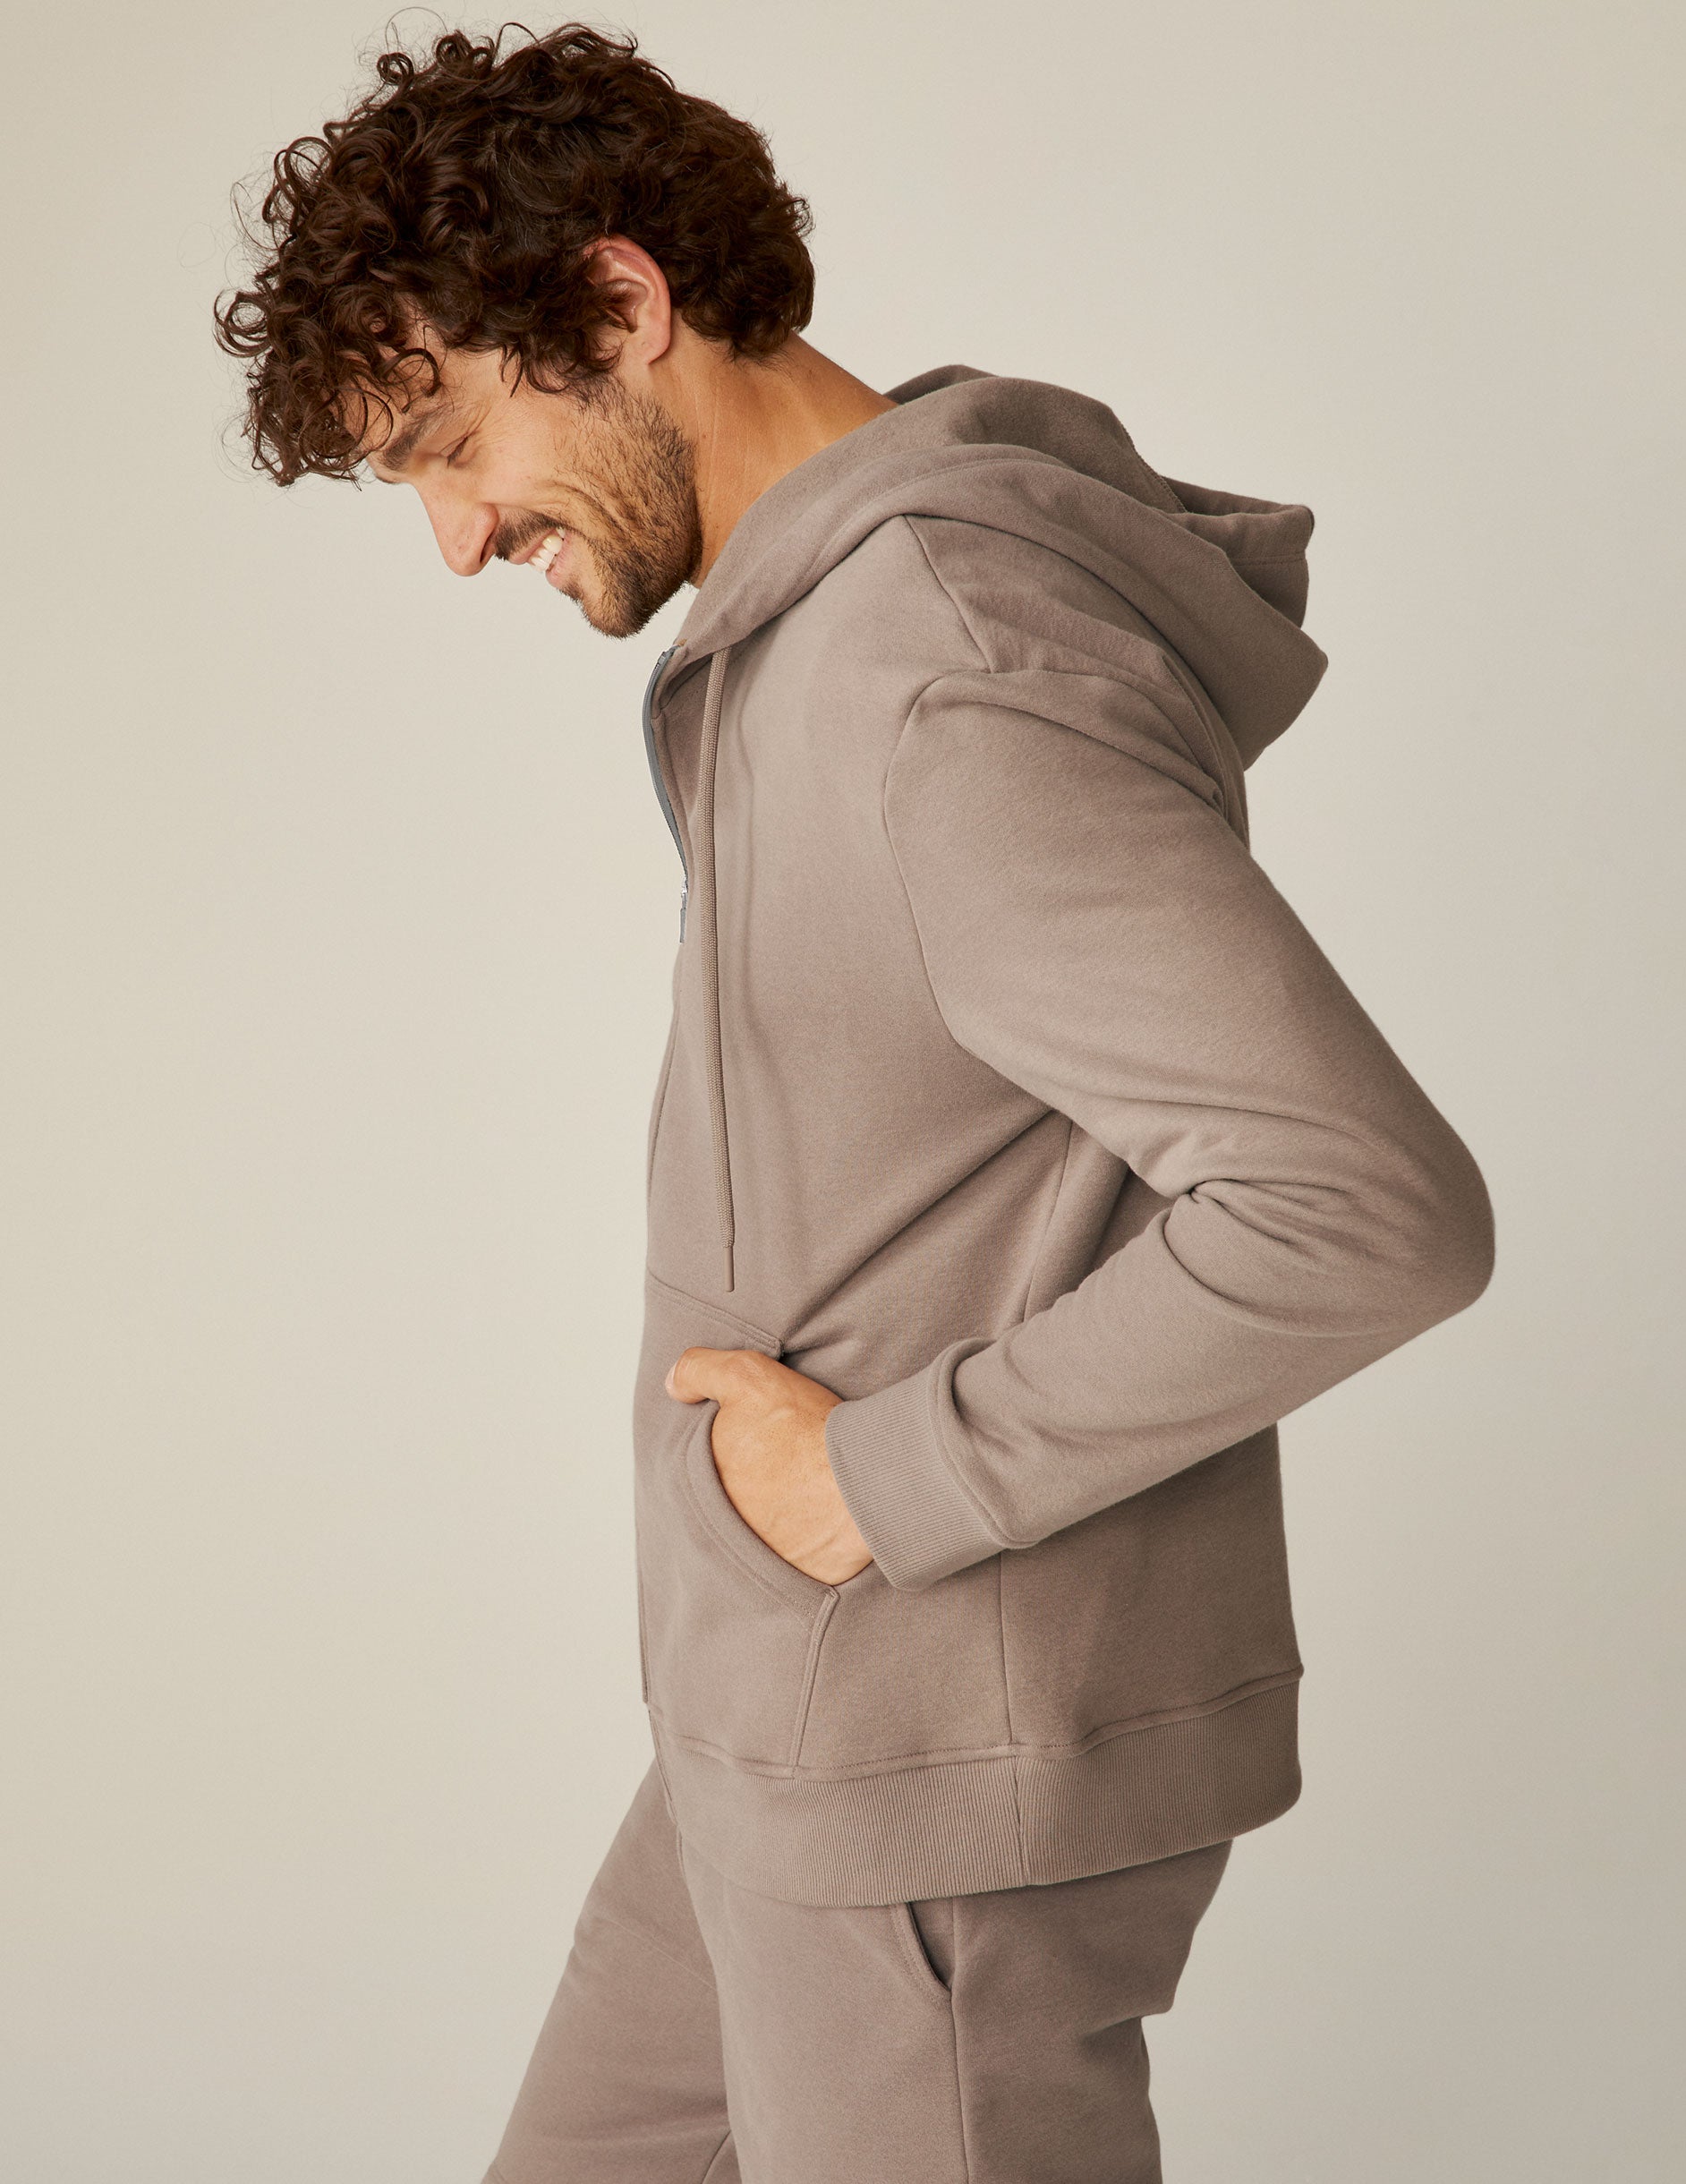 model is wearing a brown men's zip-up hooded jacket. 